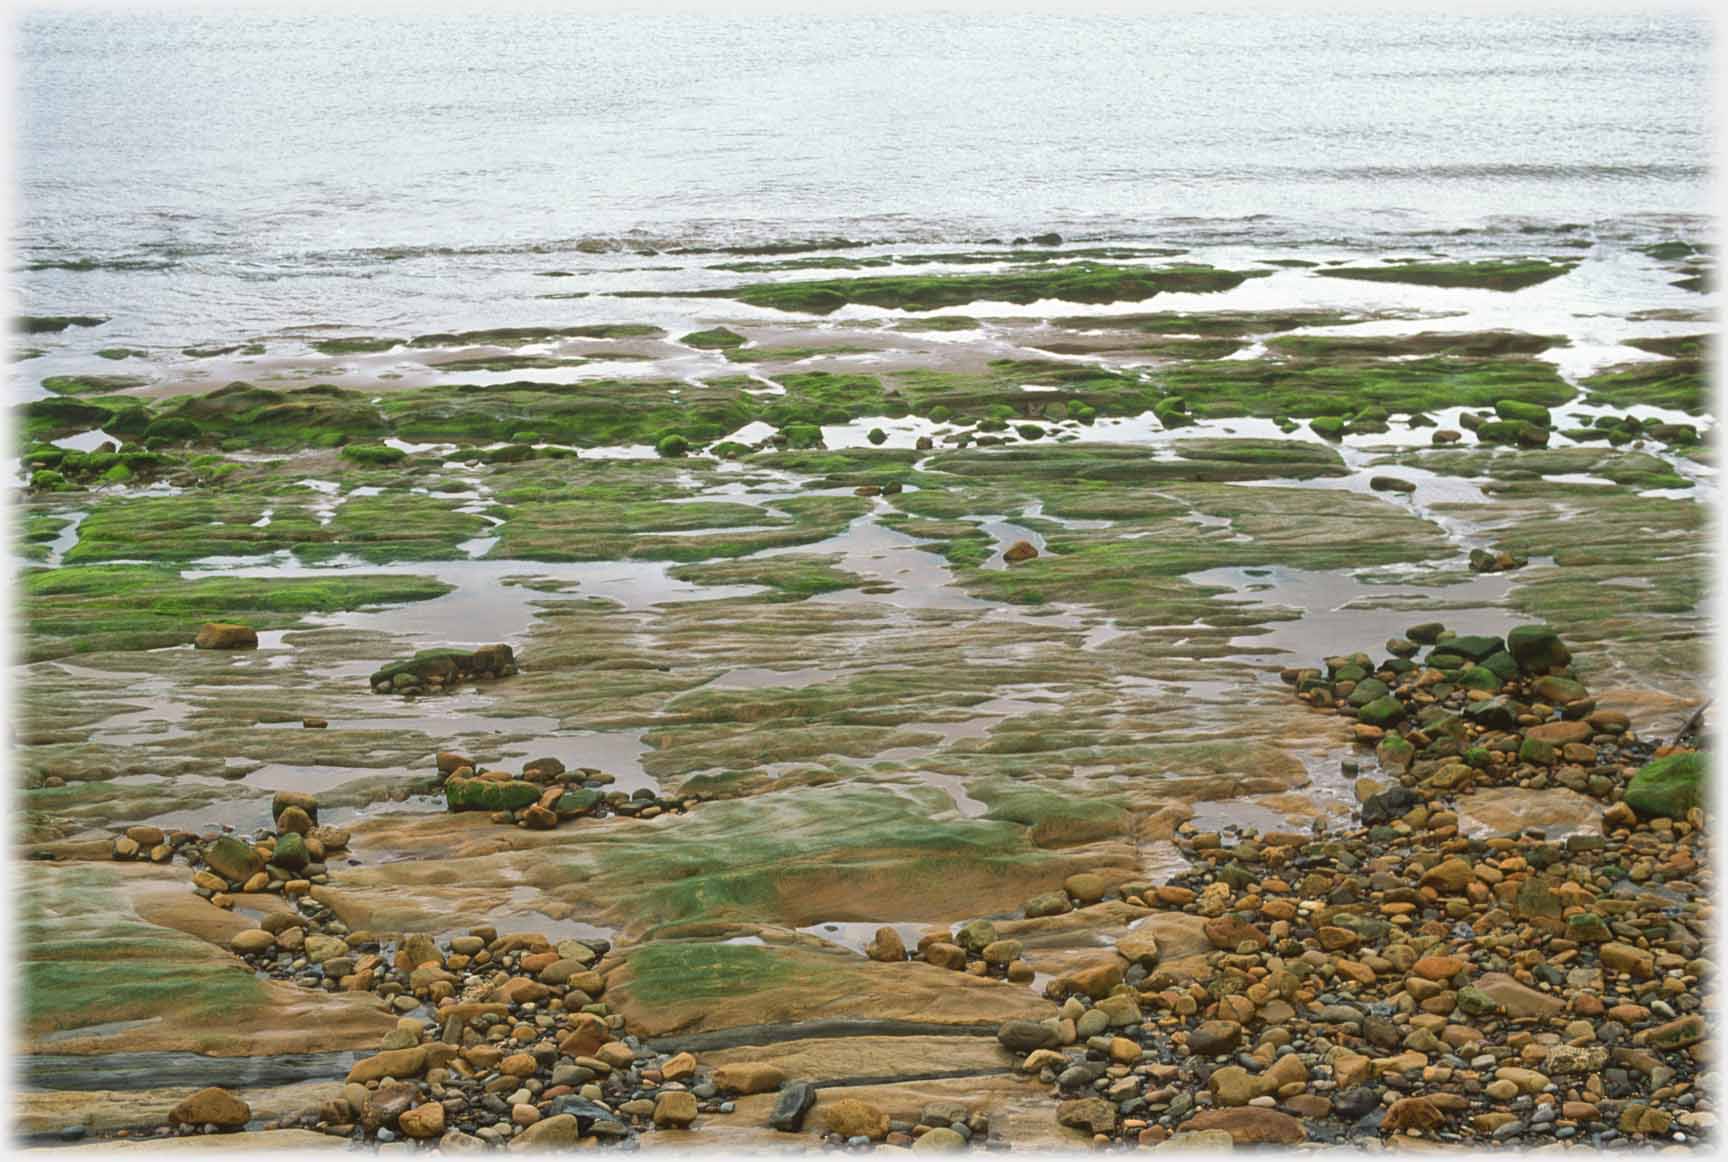 Intertidal zone of rocks covered in green seaweed.